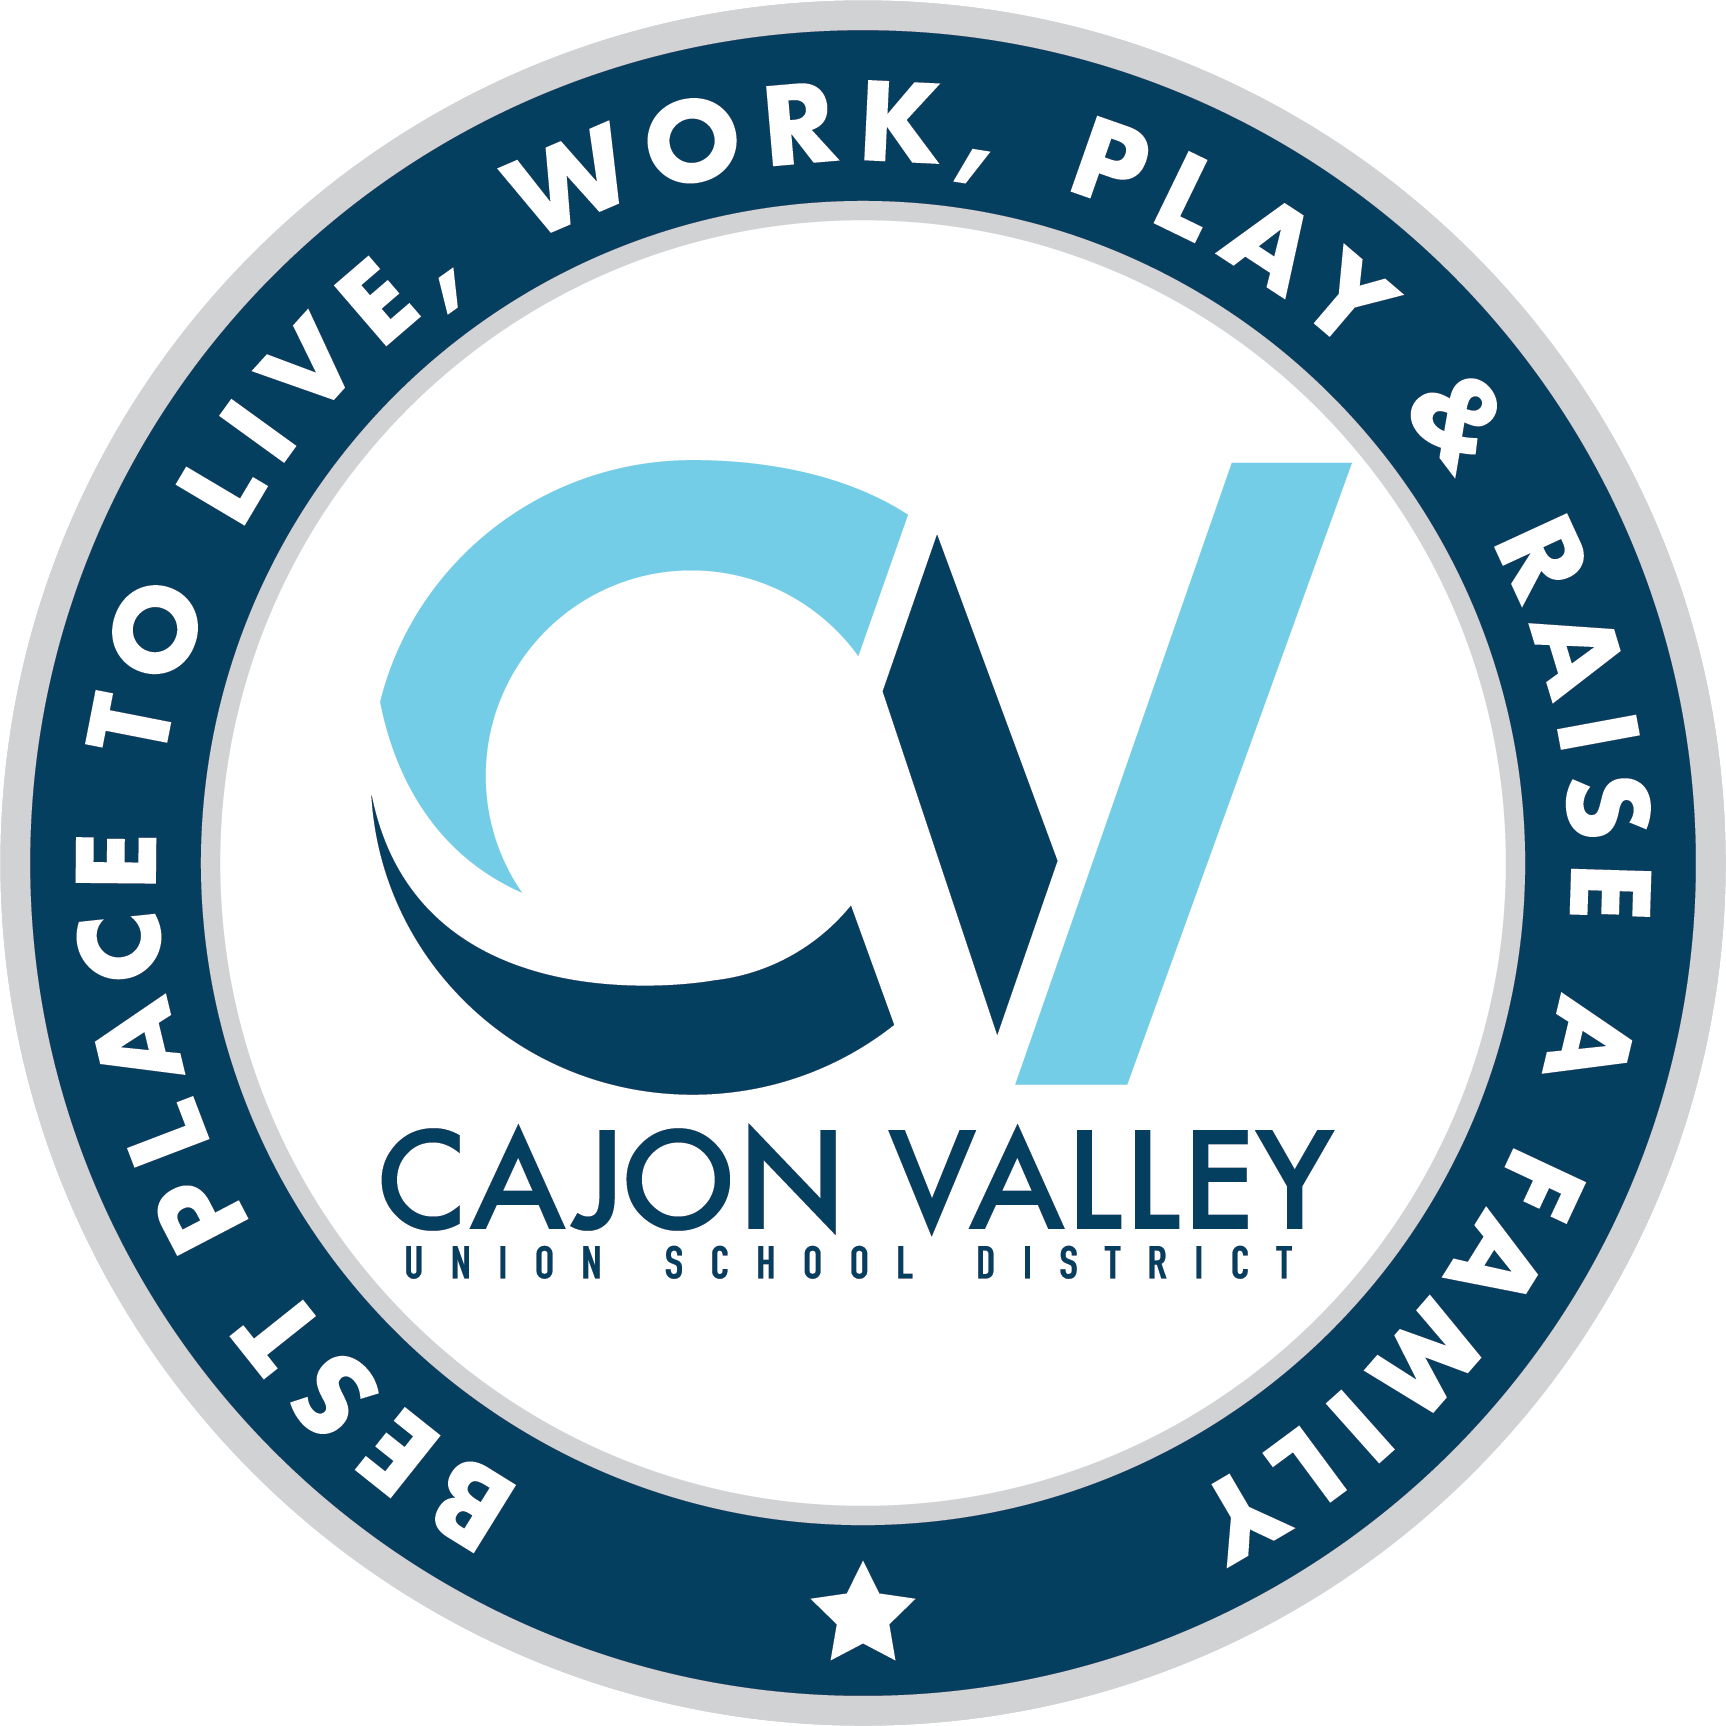 Cajon Valley Union School District logo